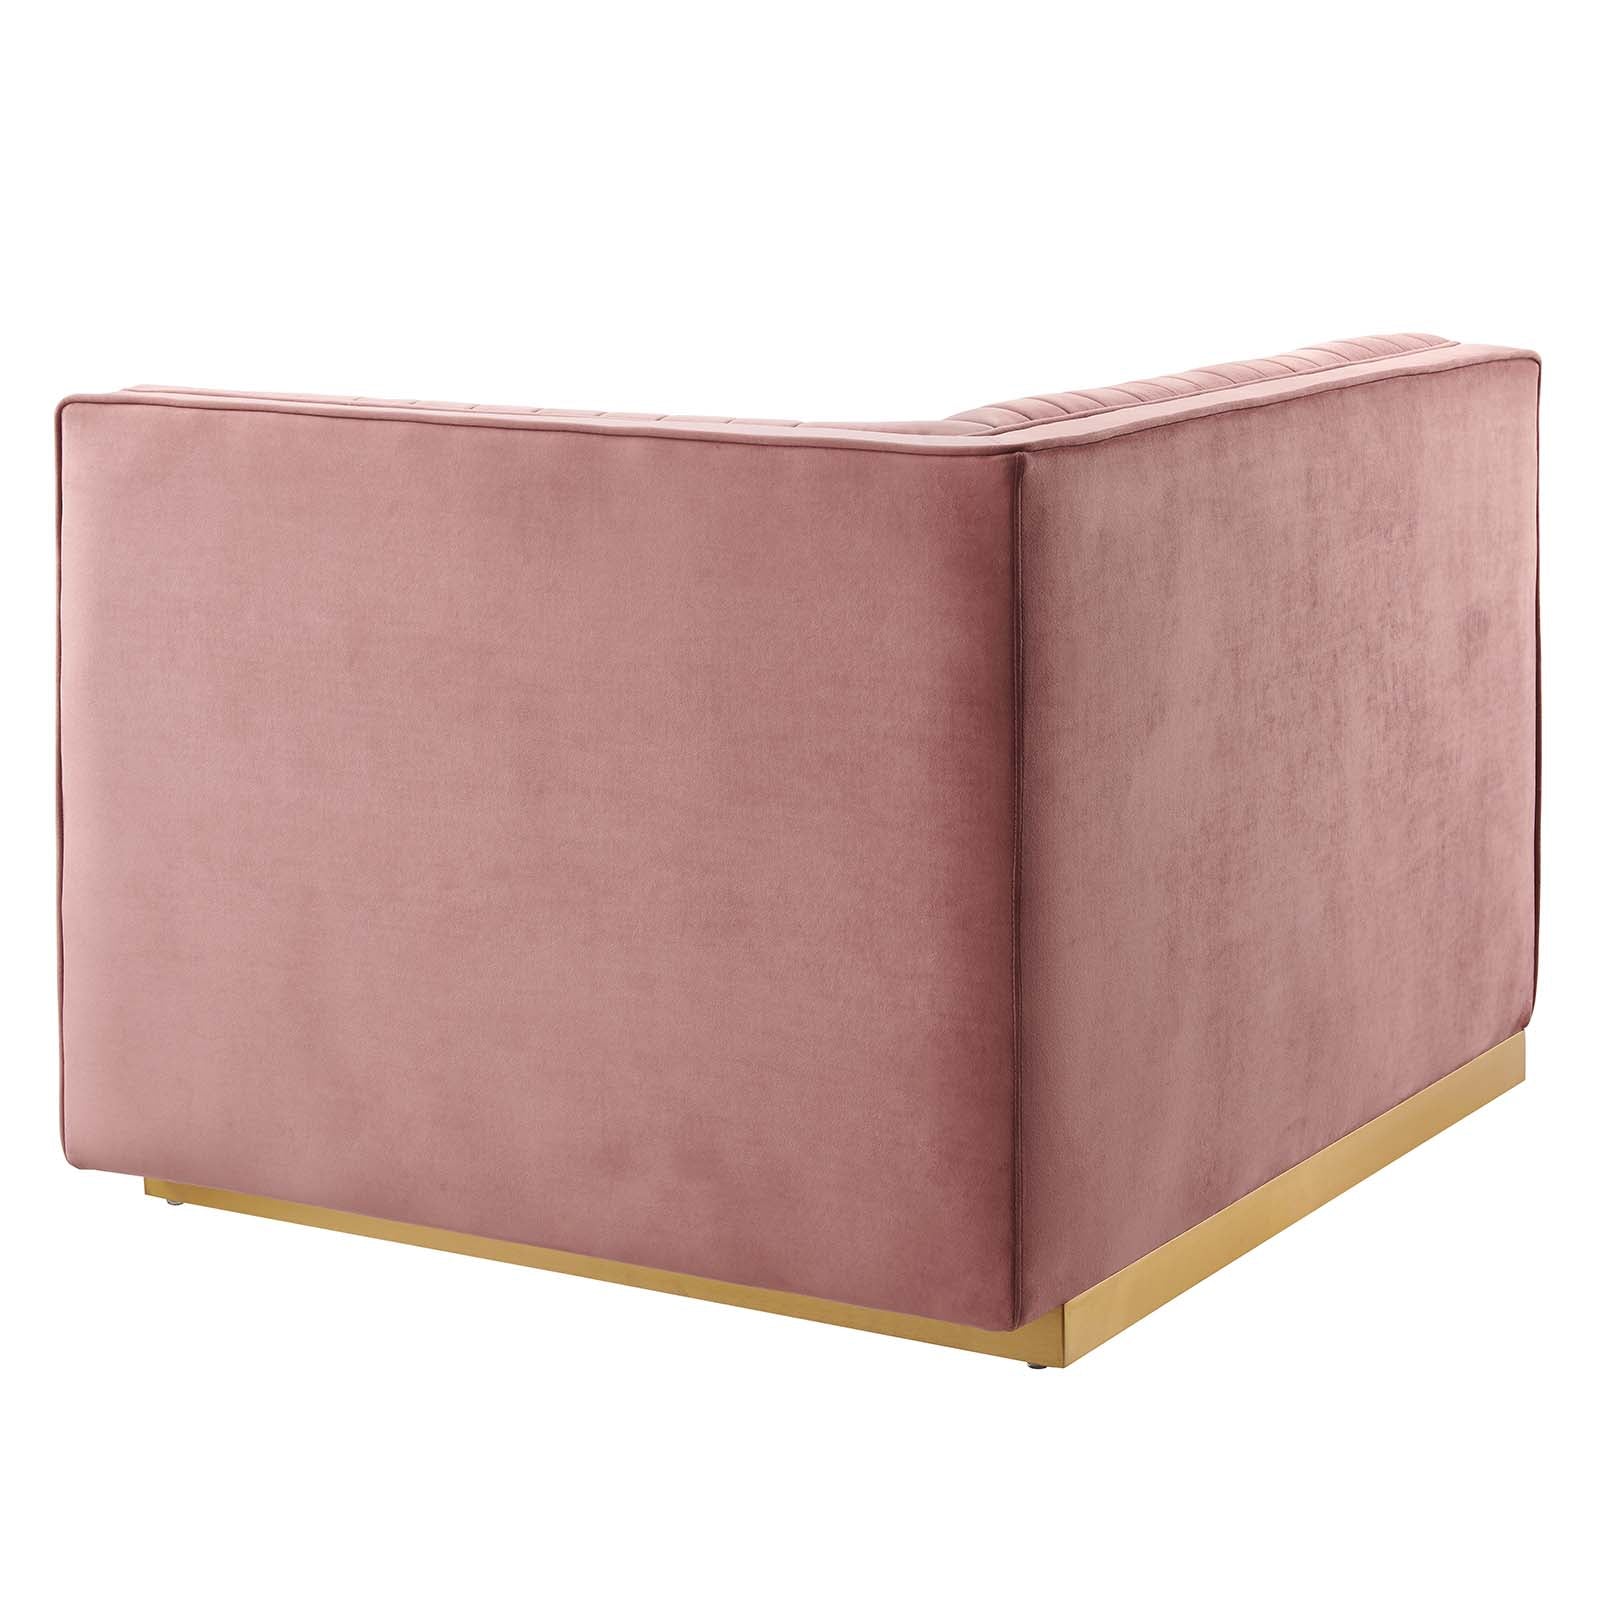 Sanguine Channel Tufted Performance Velvet Modular Sectional Sofa Right-Arm Chair - East Shore Modern Home Furnishings